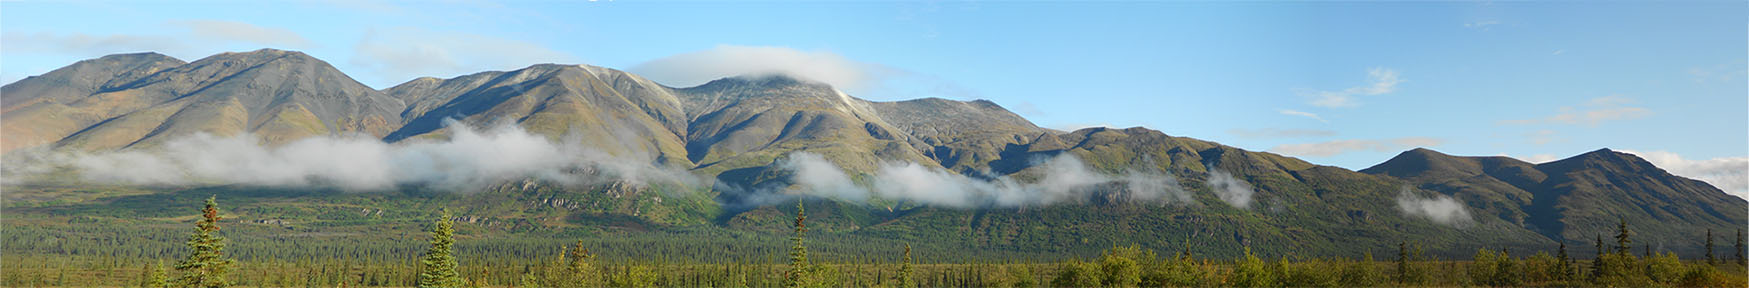 Alaska mountains with fog